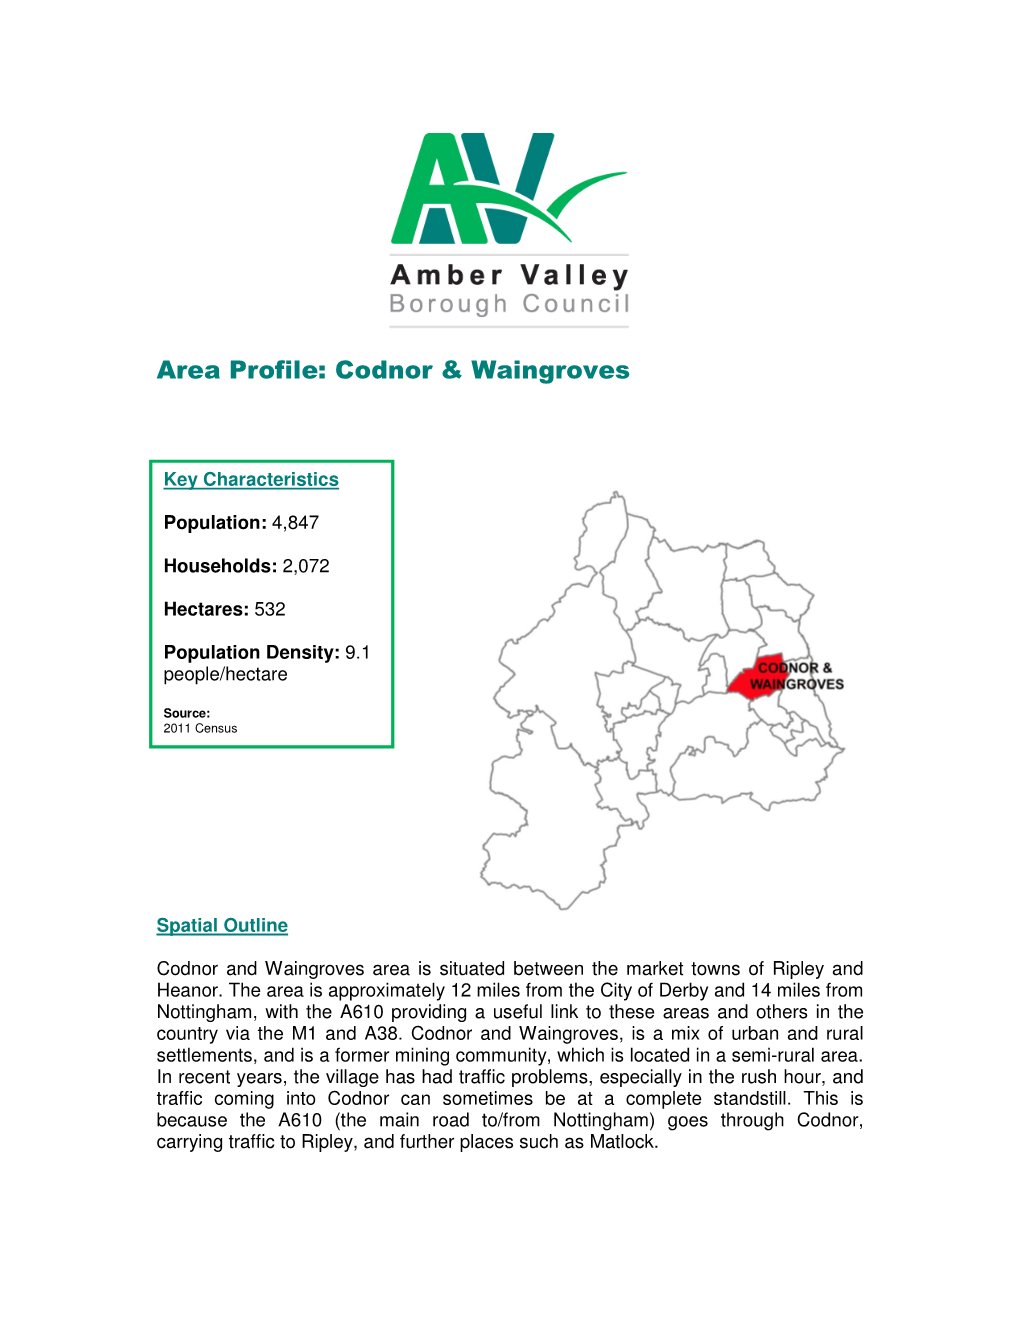 Updated Codnor & Waingroves Area Profile